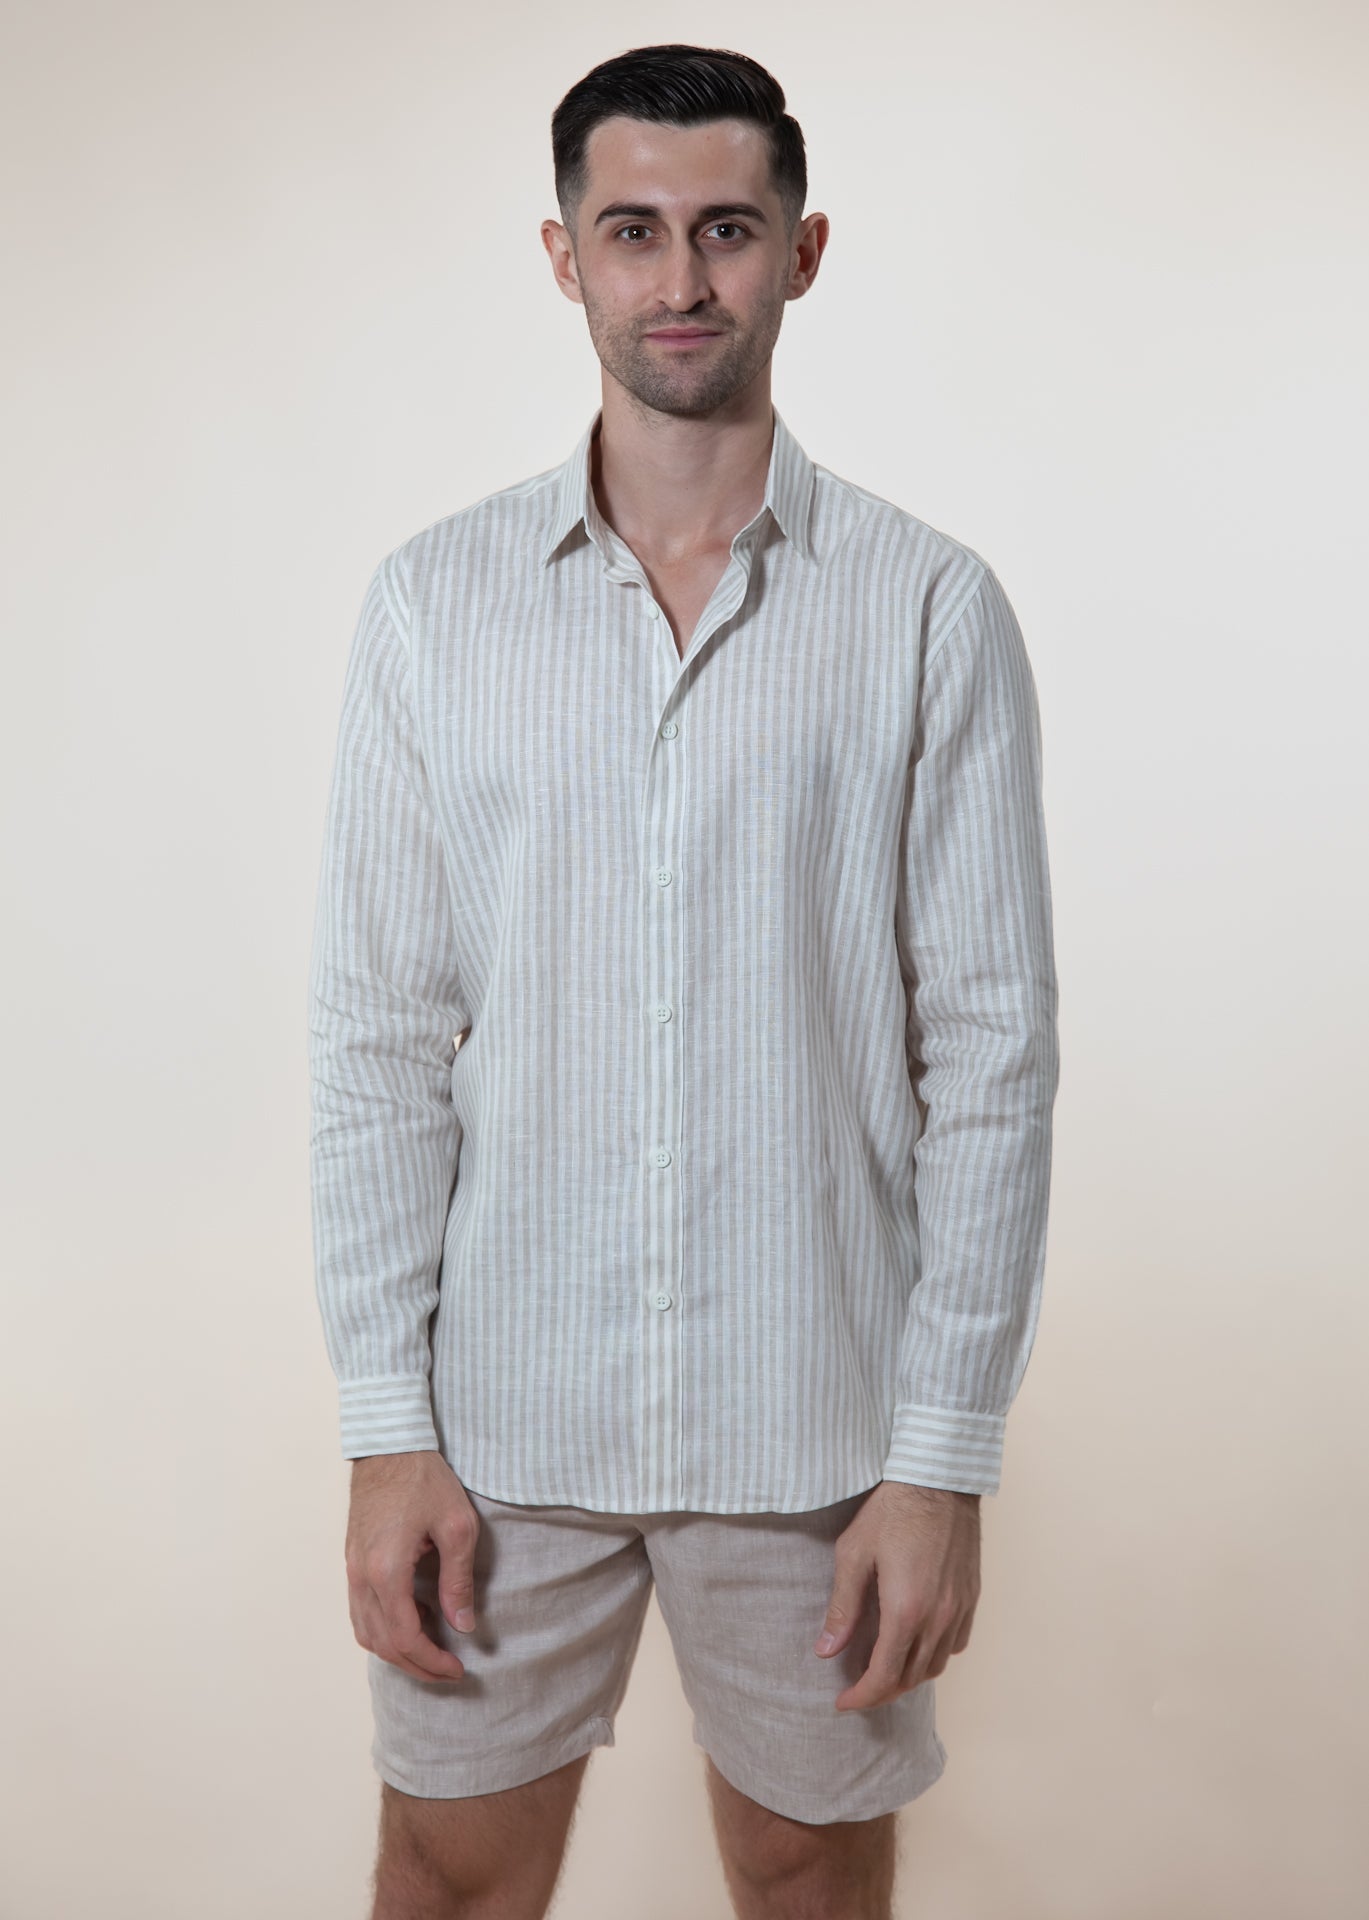 Sabbioso Stripes - Long Sleeve Italian Linen Shirt - Mr. Linen Co Mr. Linen CO